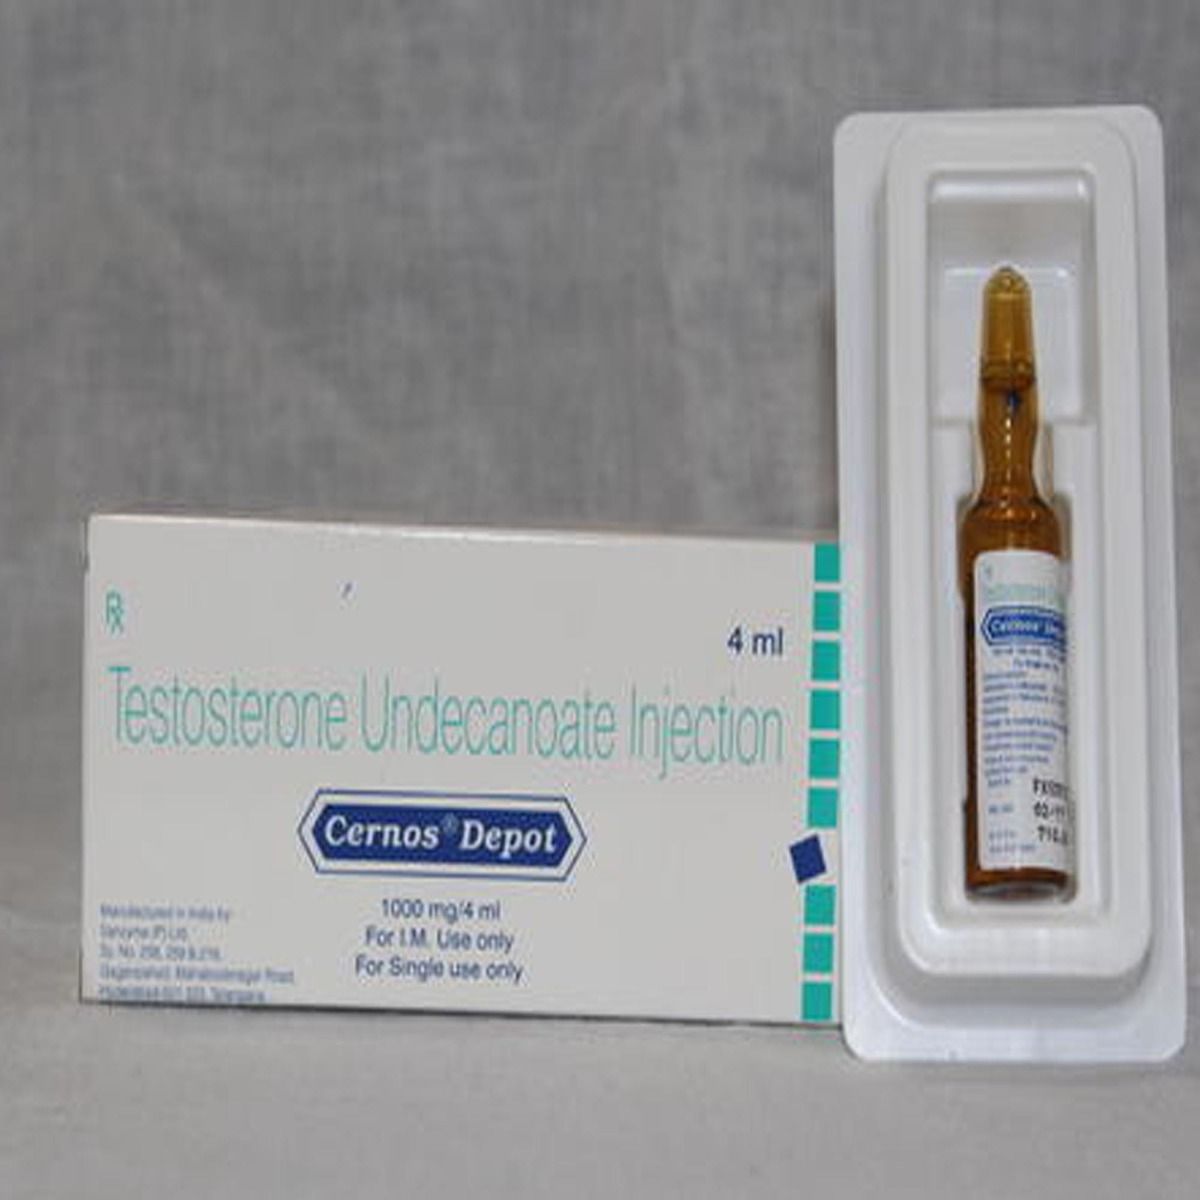 cernos-depot-1000-mg-injection